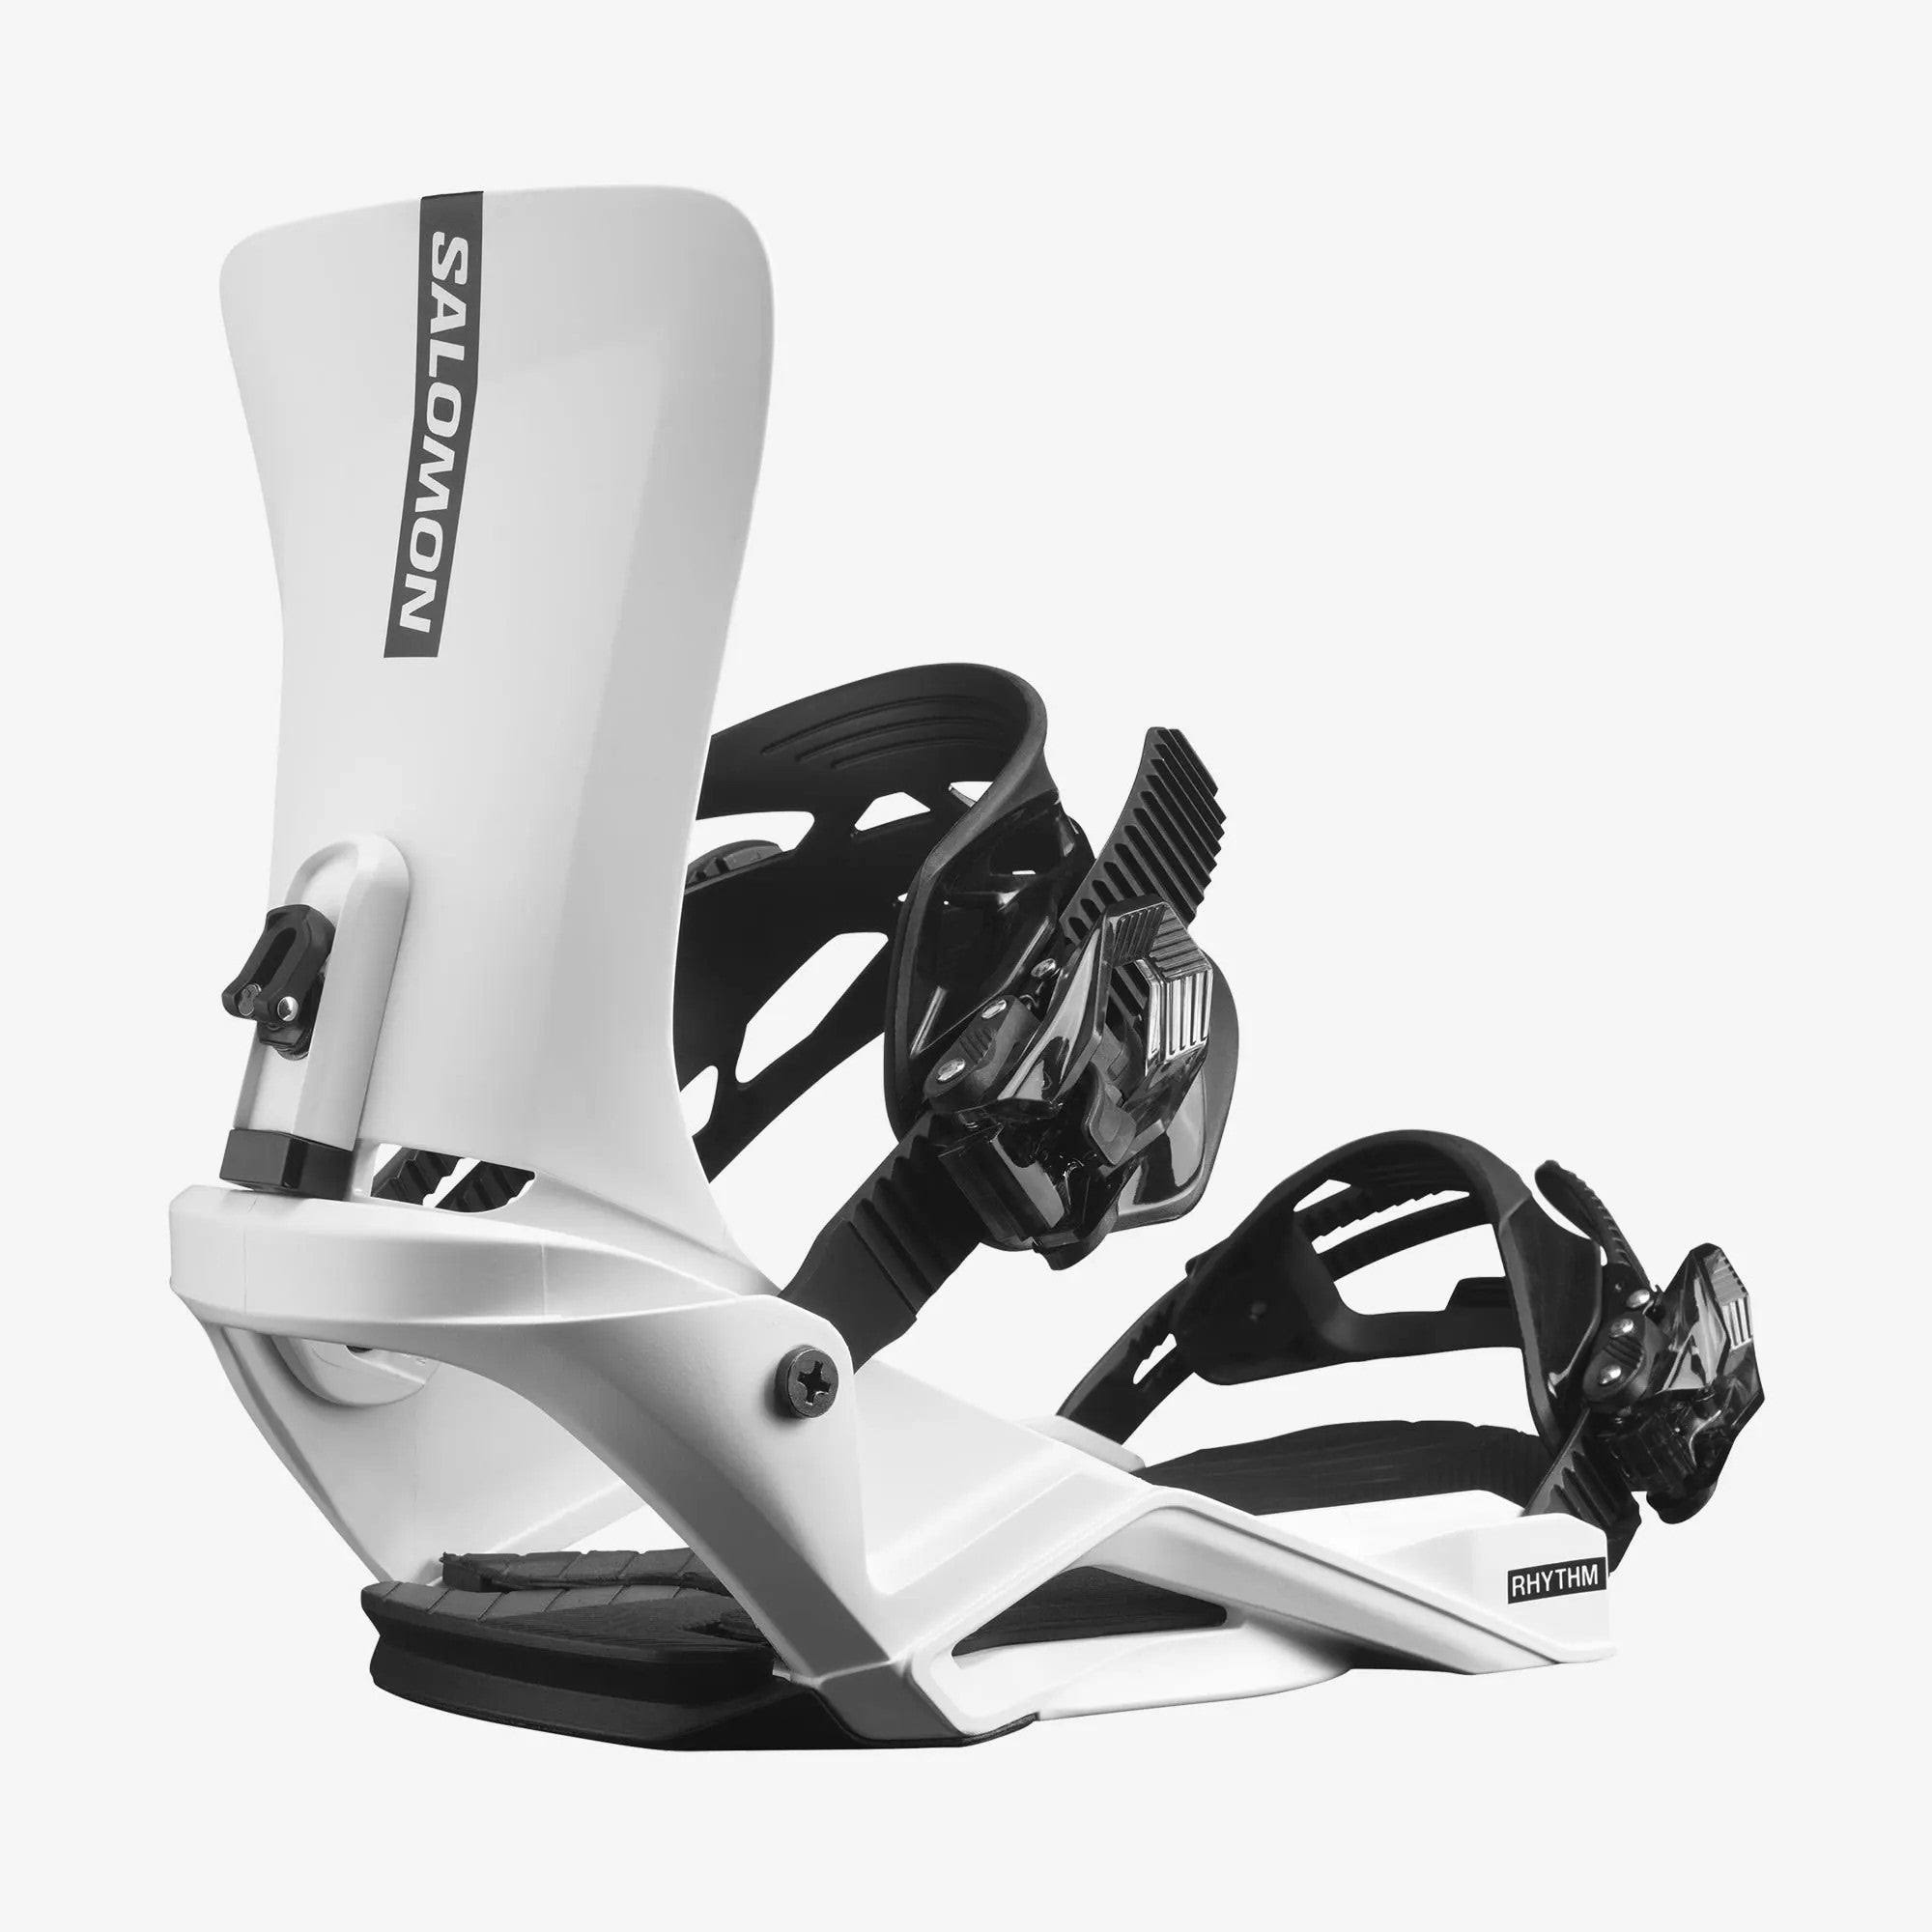 Salomon - Unisex Snowboard Bindings Rhythm - White